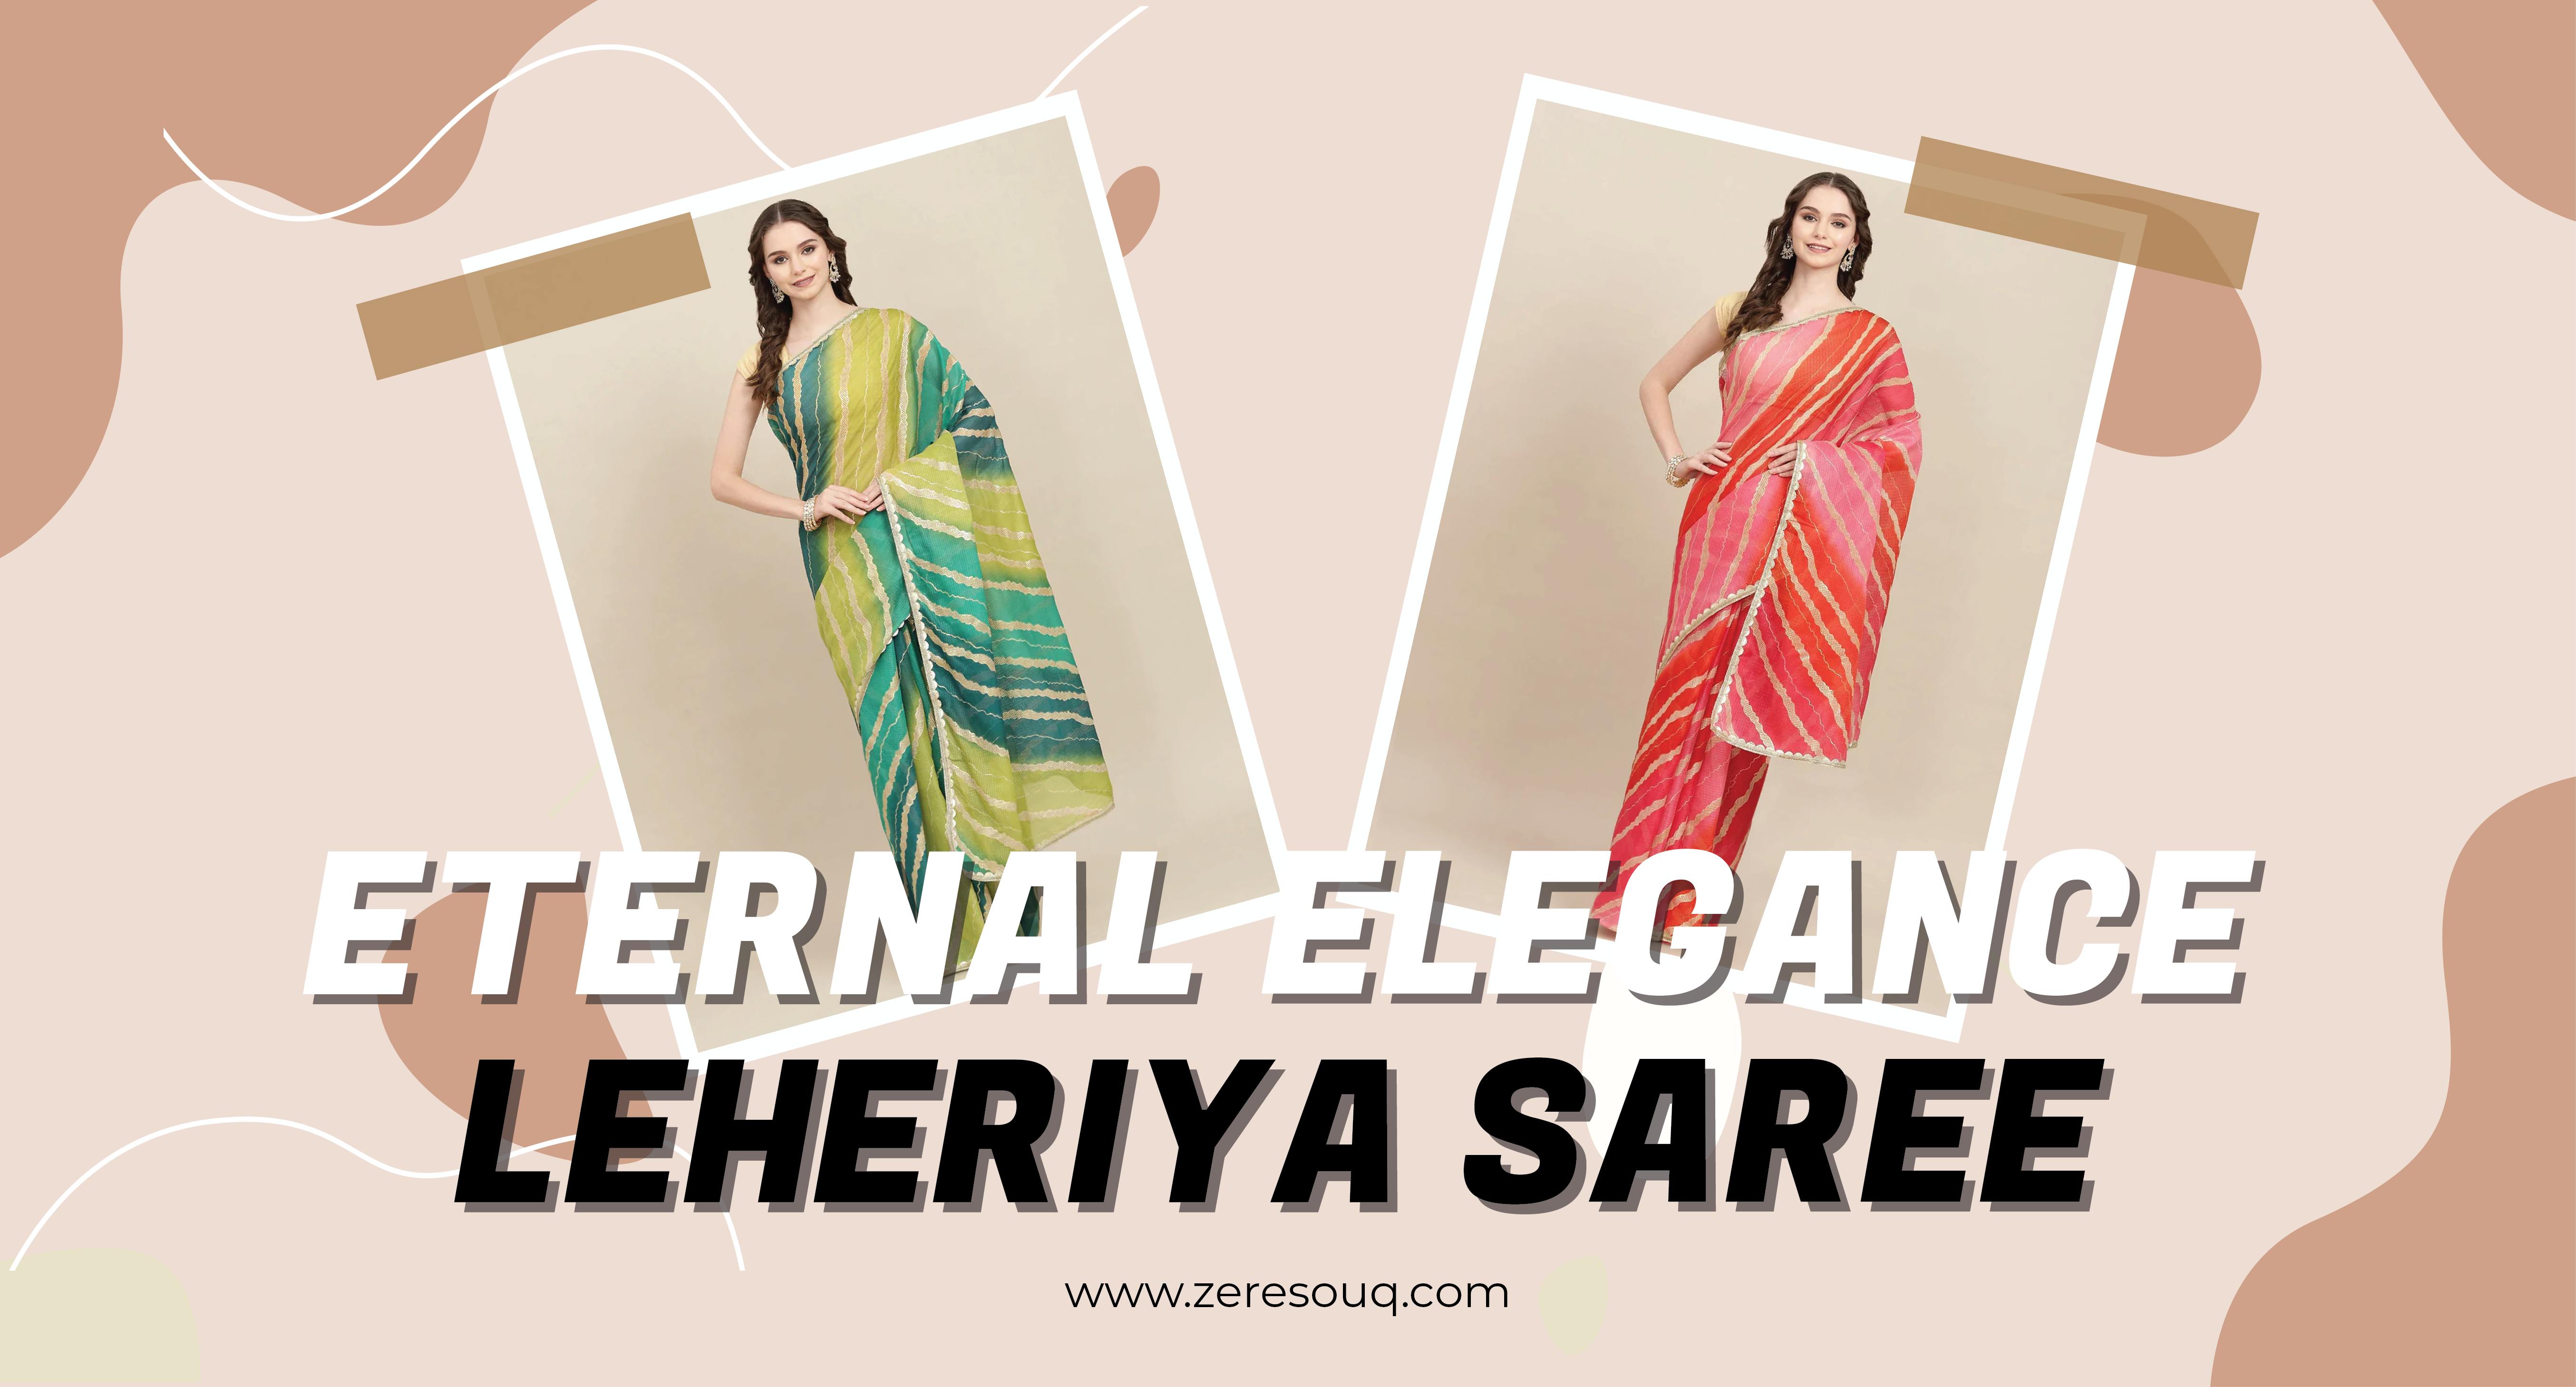 The Eternal Elegance of Leheriya Sarees